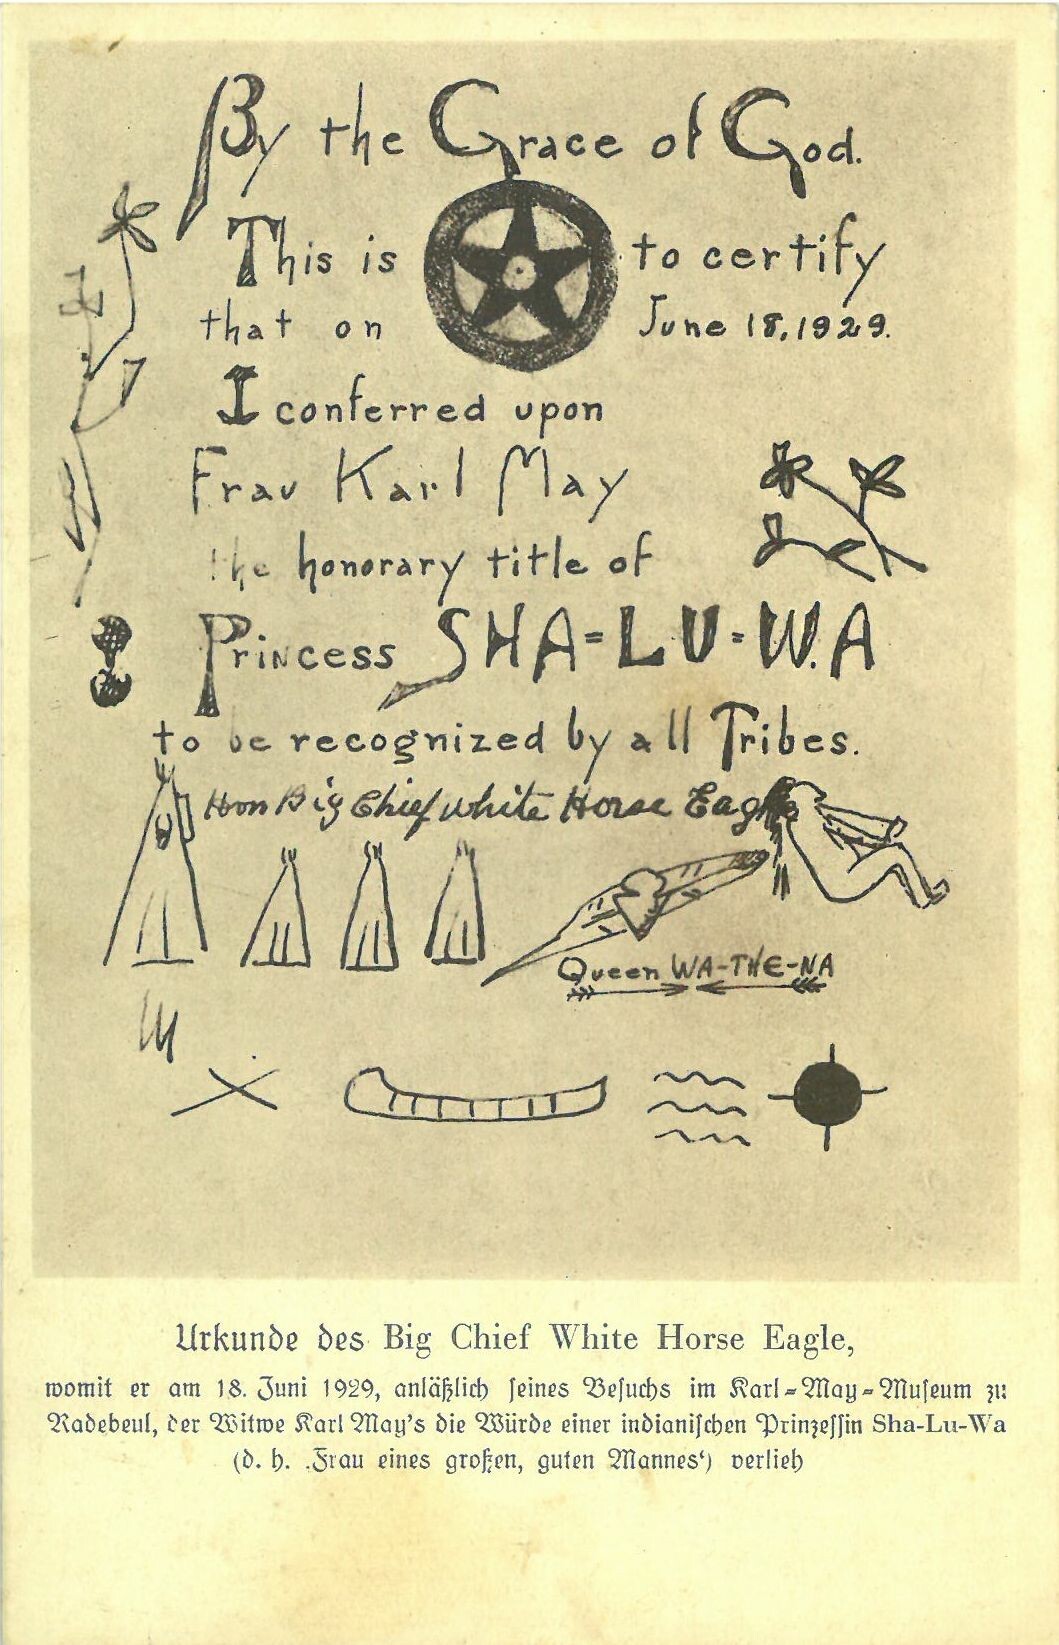 Urkunde des Big Chief White Horse Eagle, 18. Juni 1929 (Karl-May-Museum gGmbH RR-R)